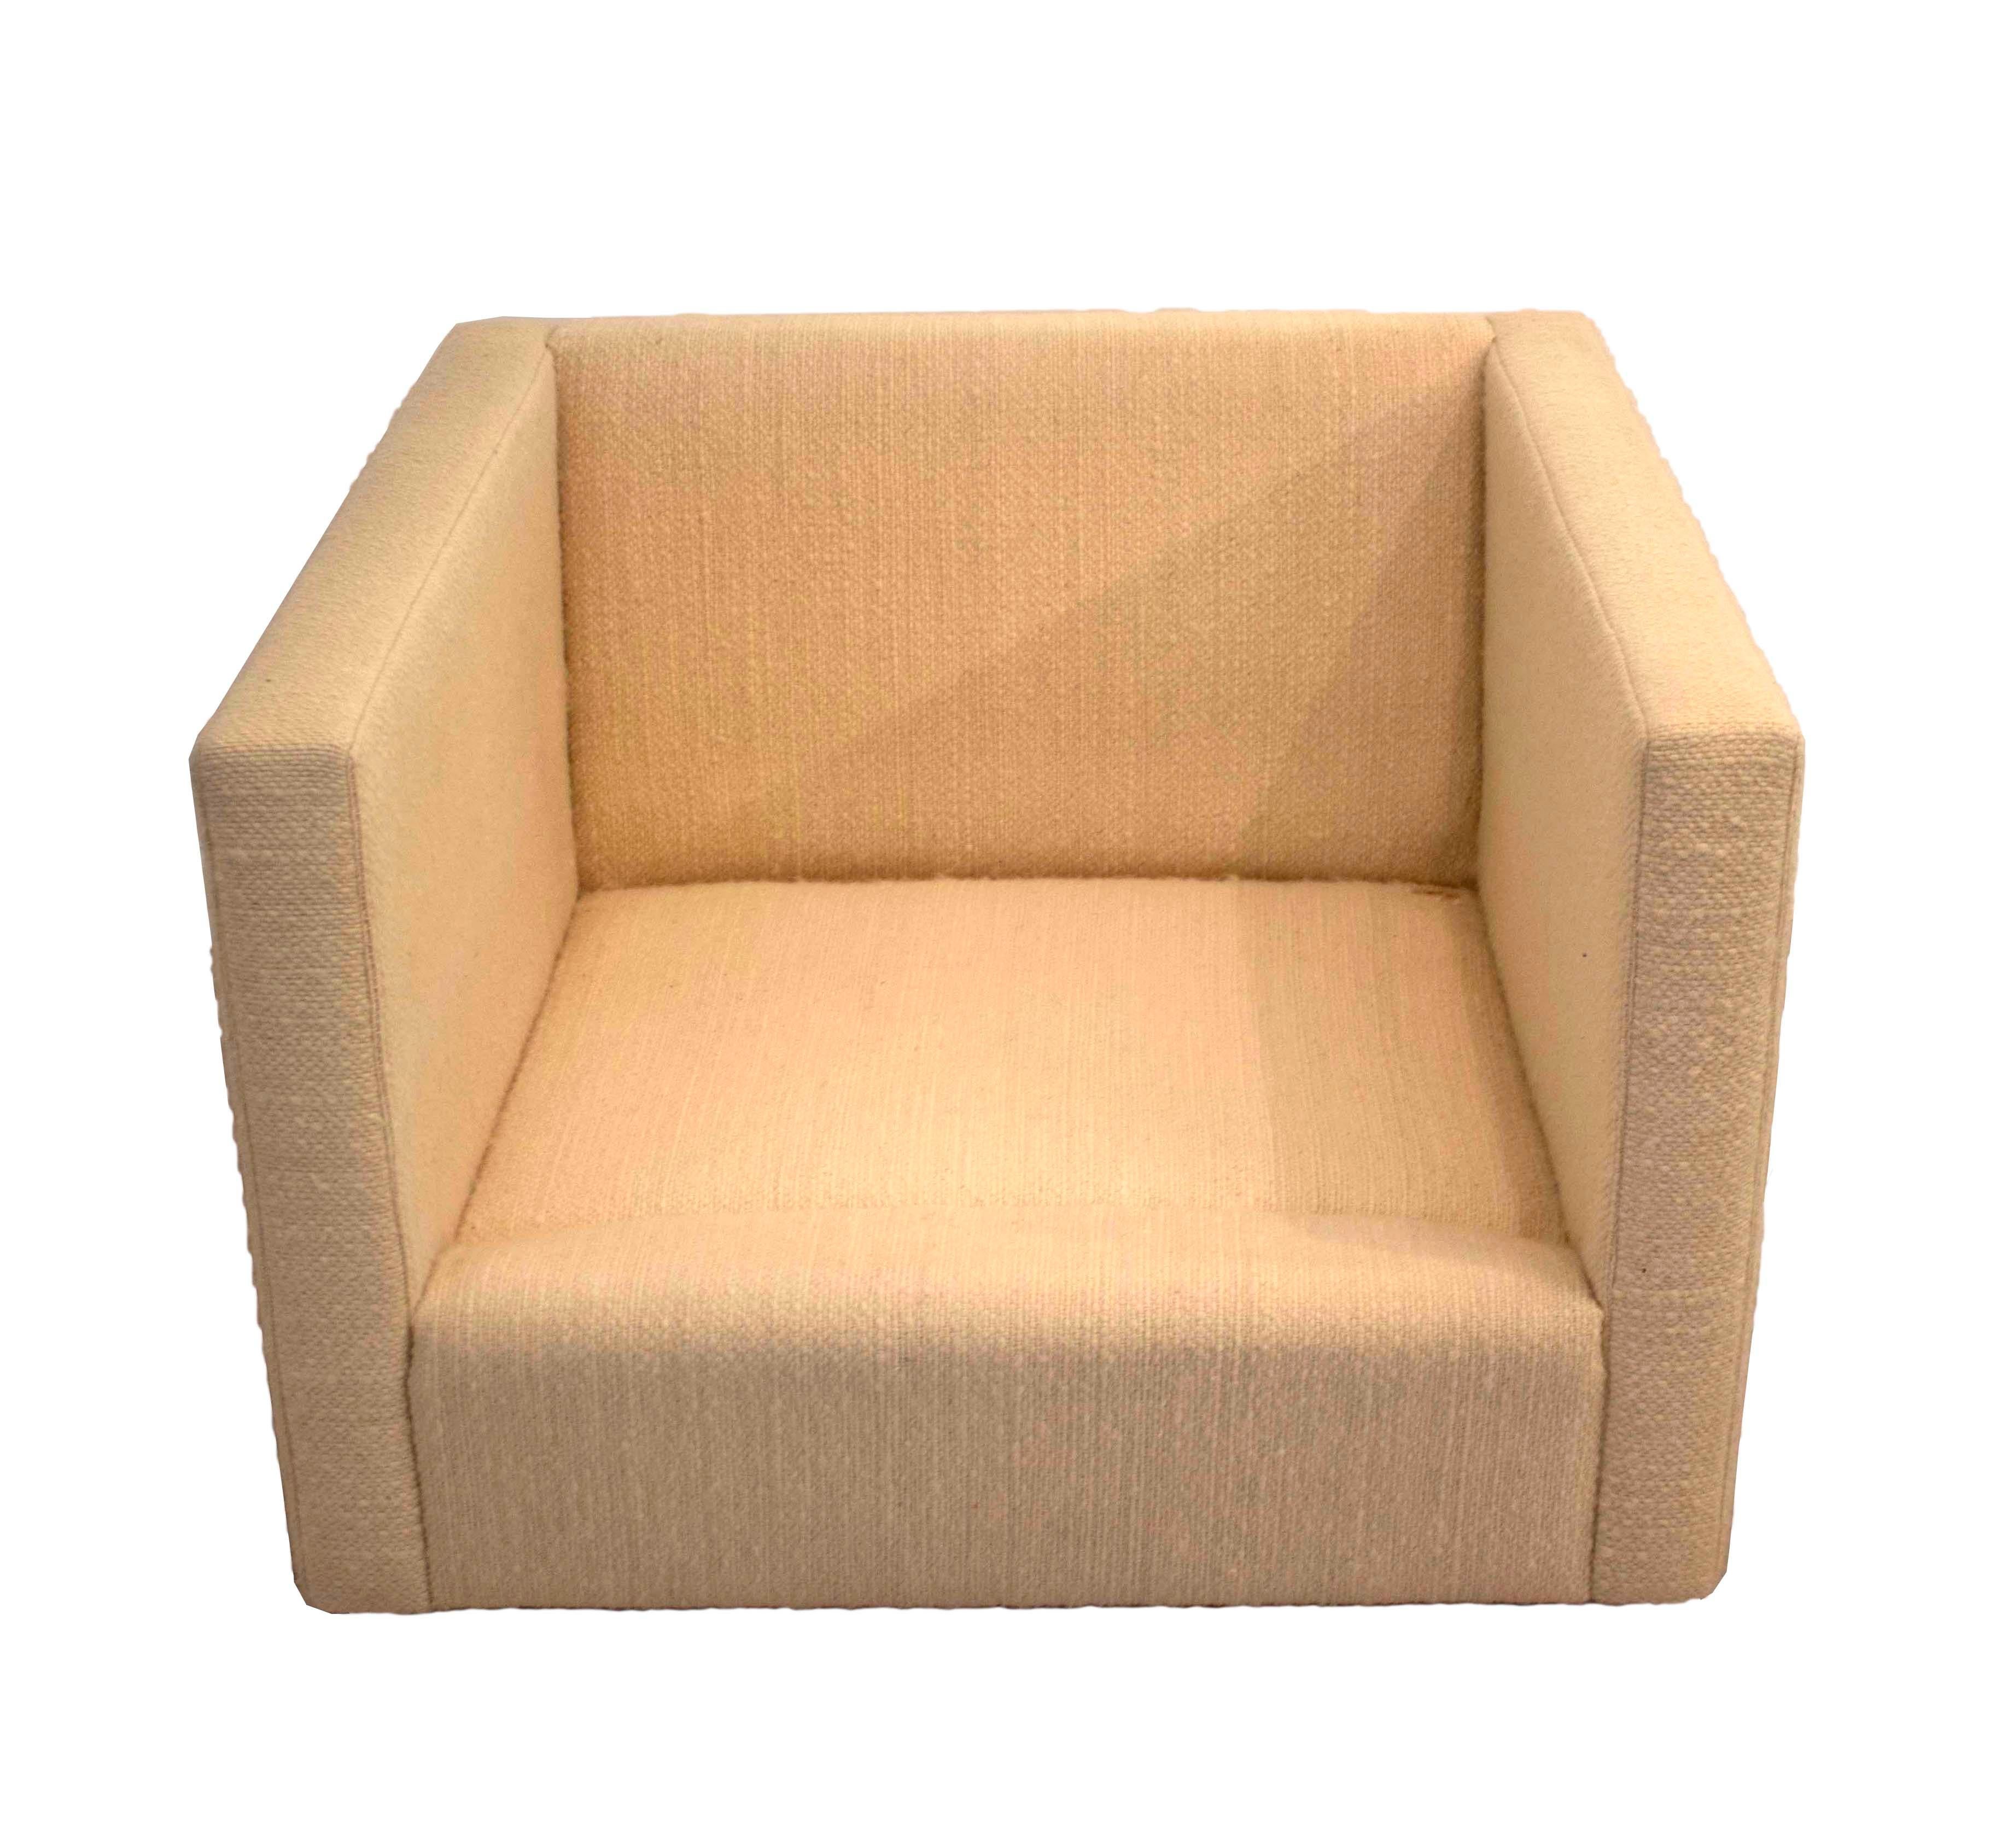 Fabric Florence Knoll Boucle Cube Club Chair Mid Century Modern